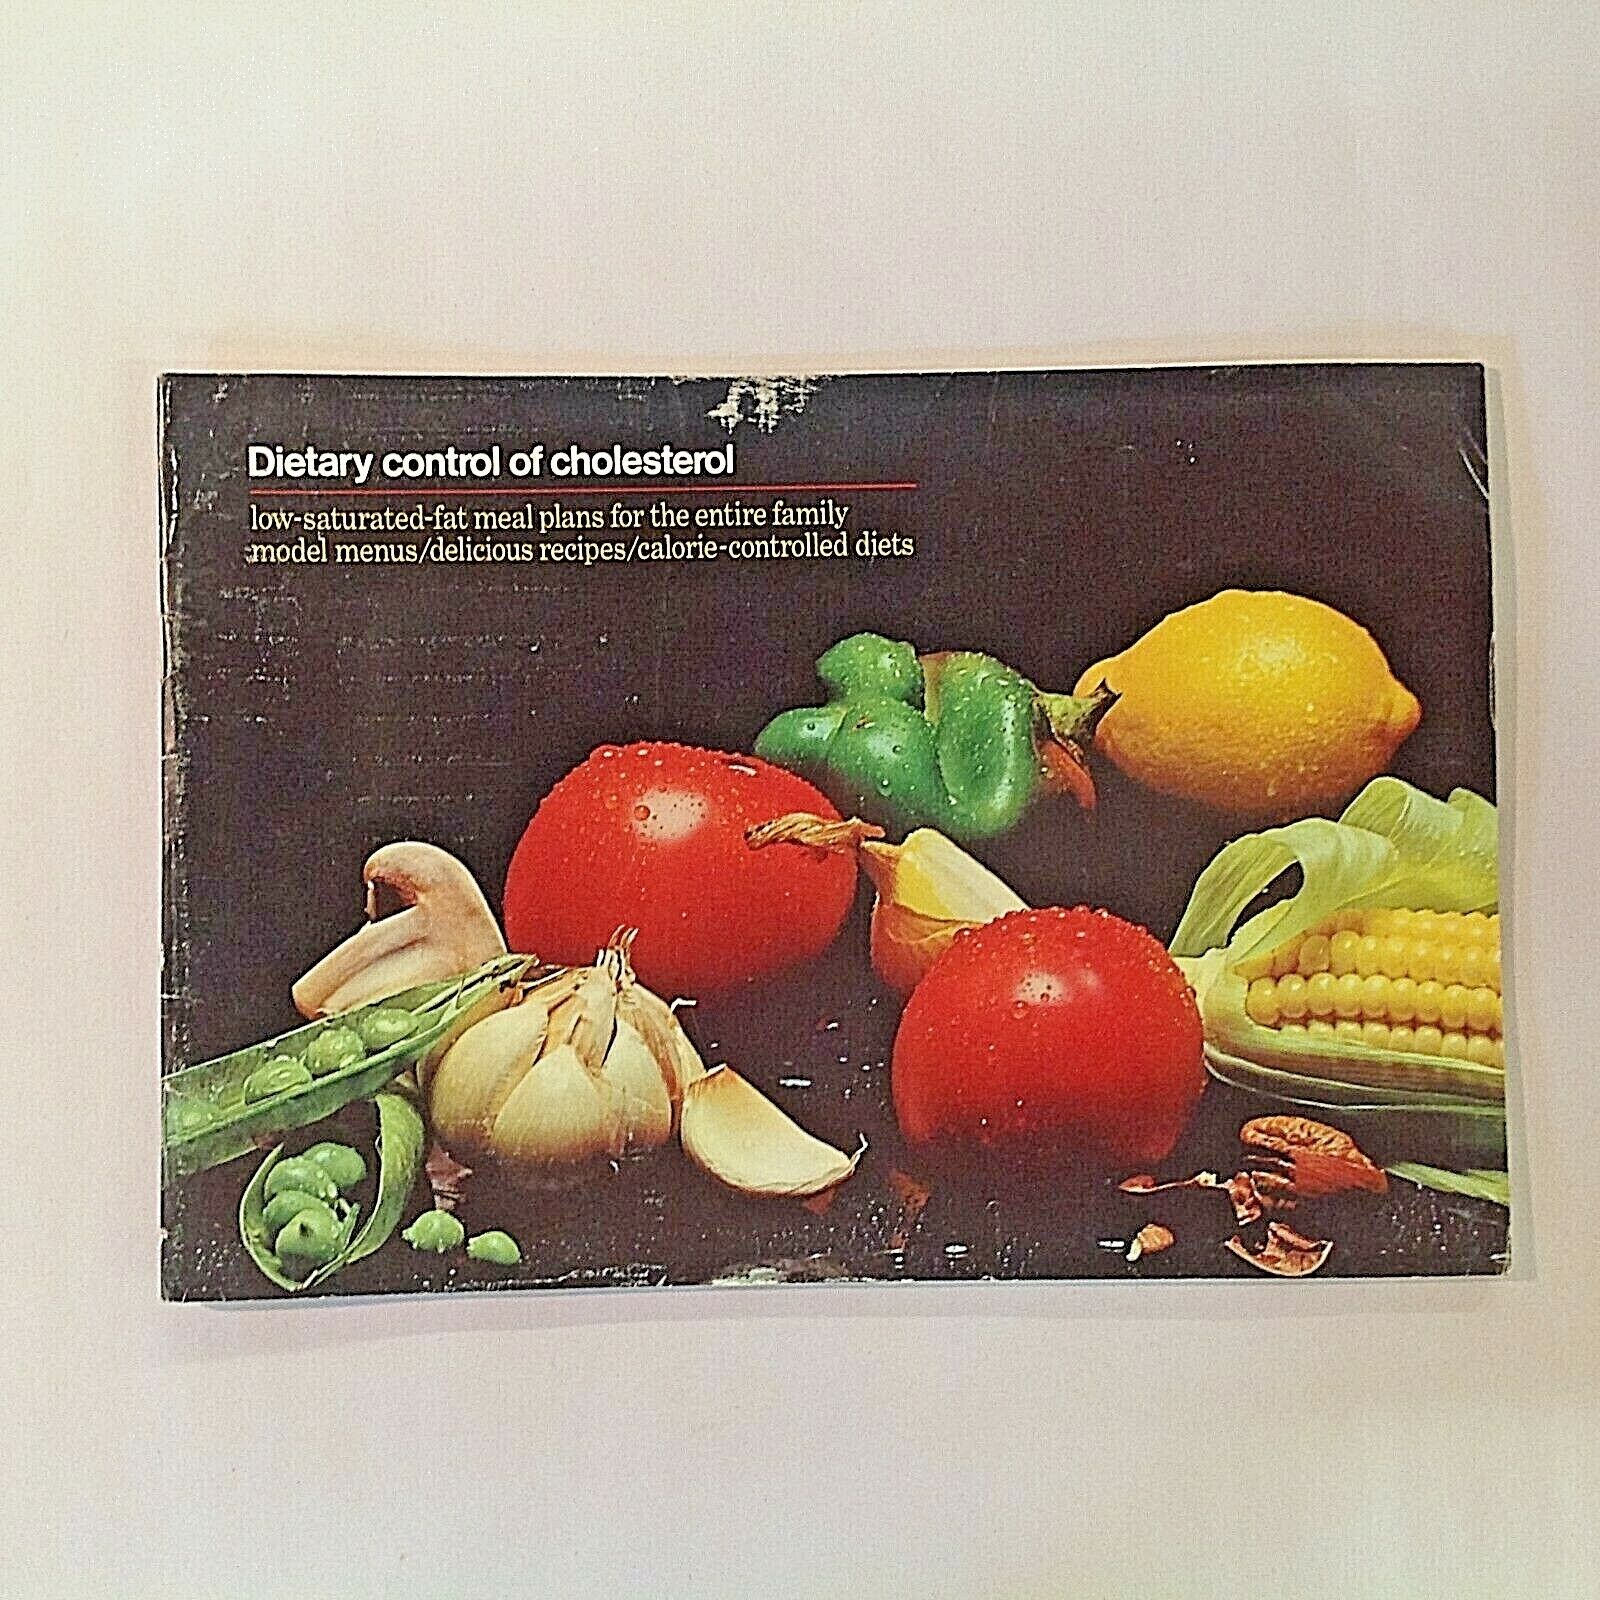 Vintage 1974 Fleischmann's Margarine Dietary Control of Cholesterol Recipe Guide